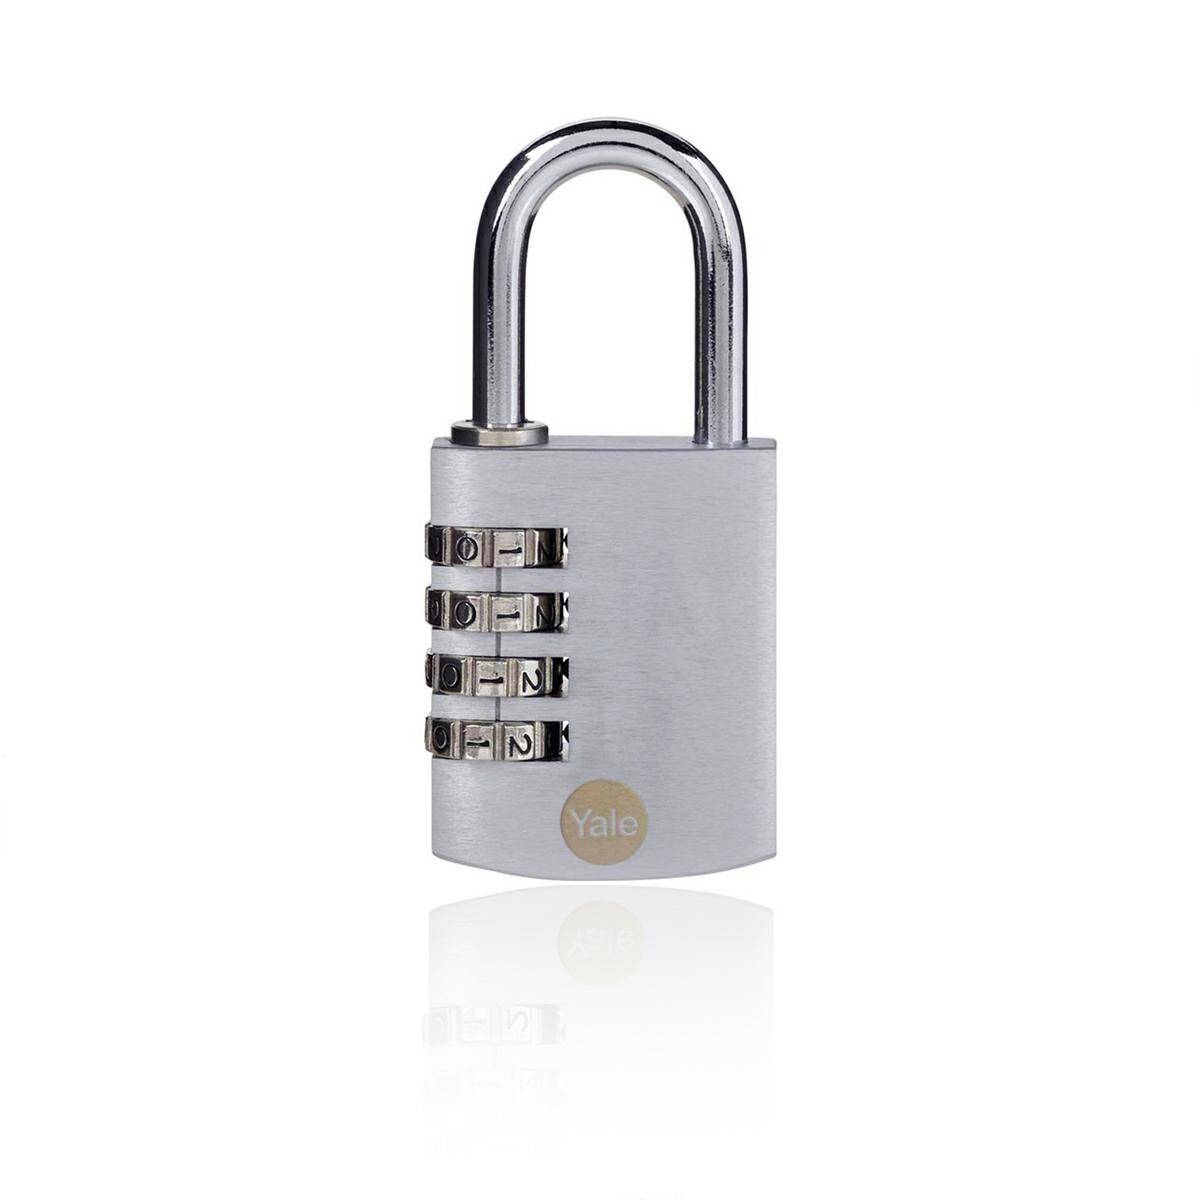 Cypher padlock Yale | brass - silver 40mm